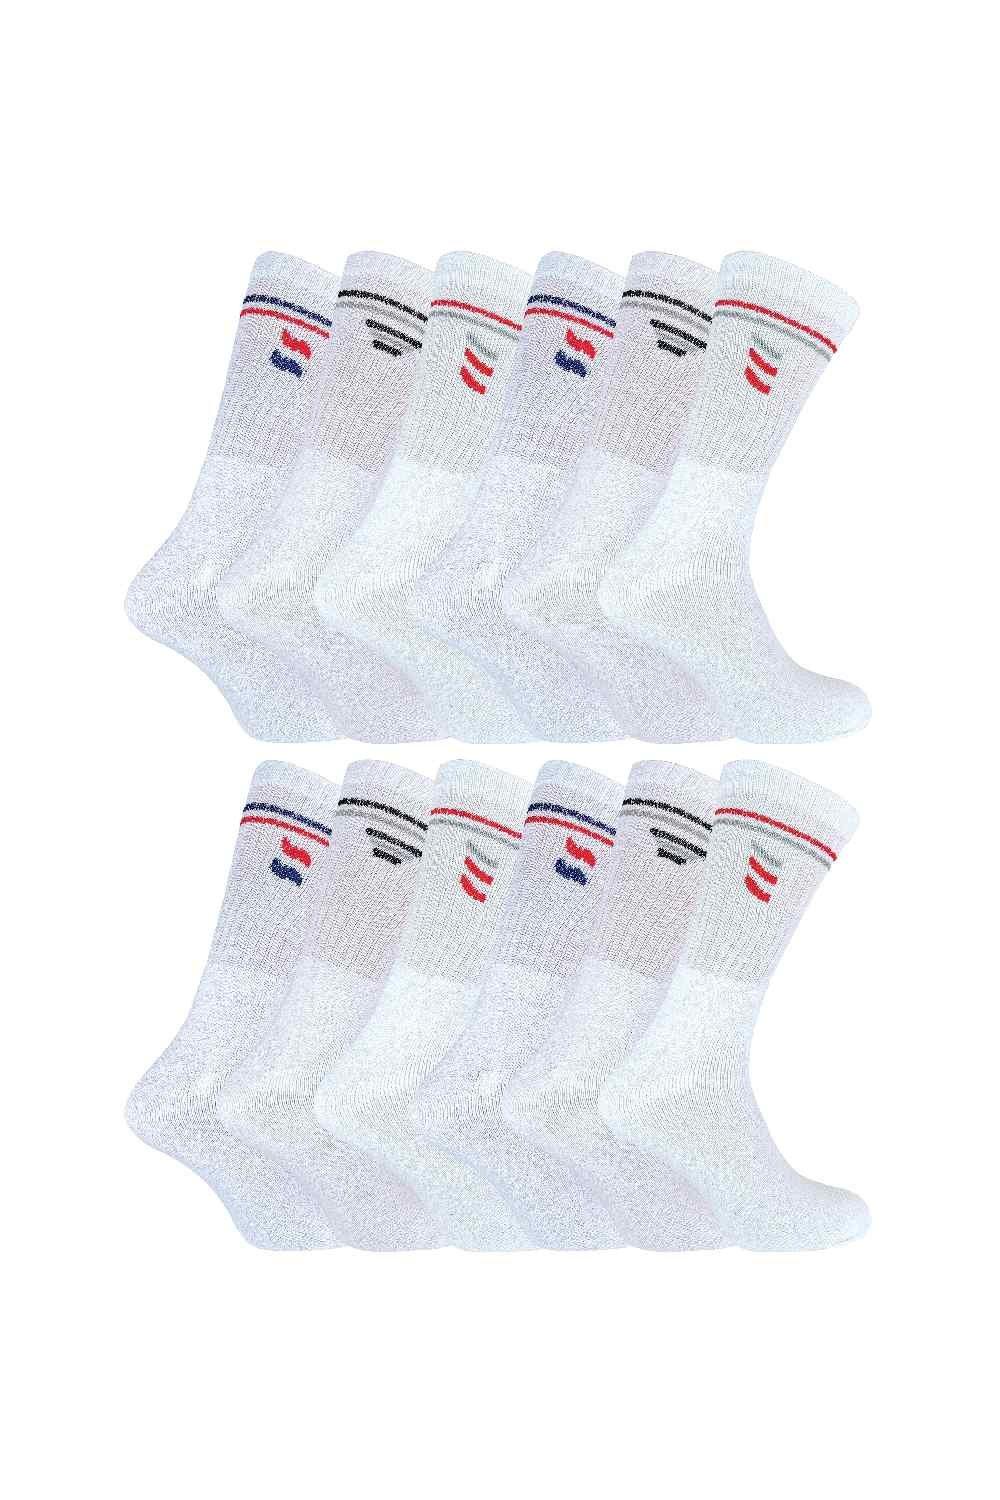 12 Pairs Cotton Sport Socks in White & Black